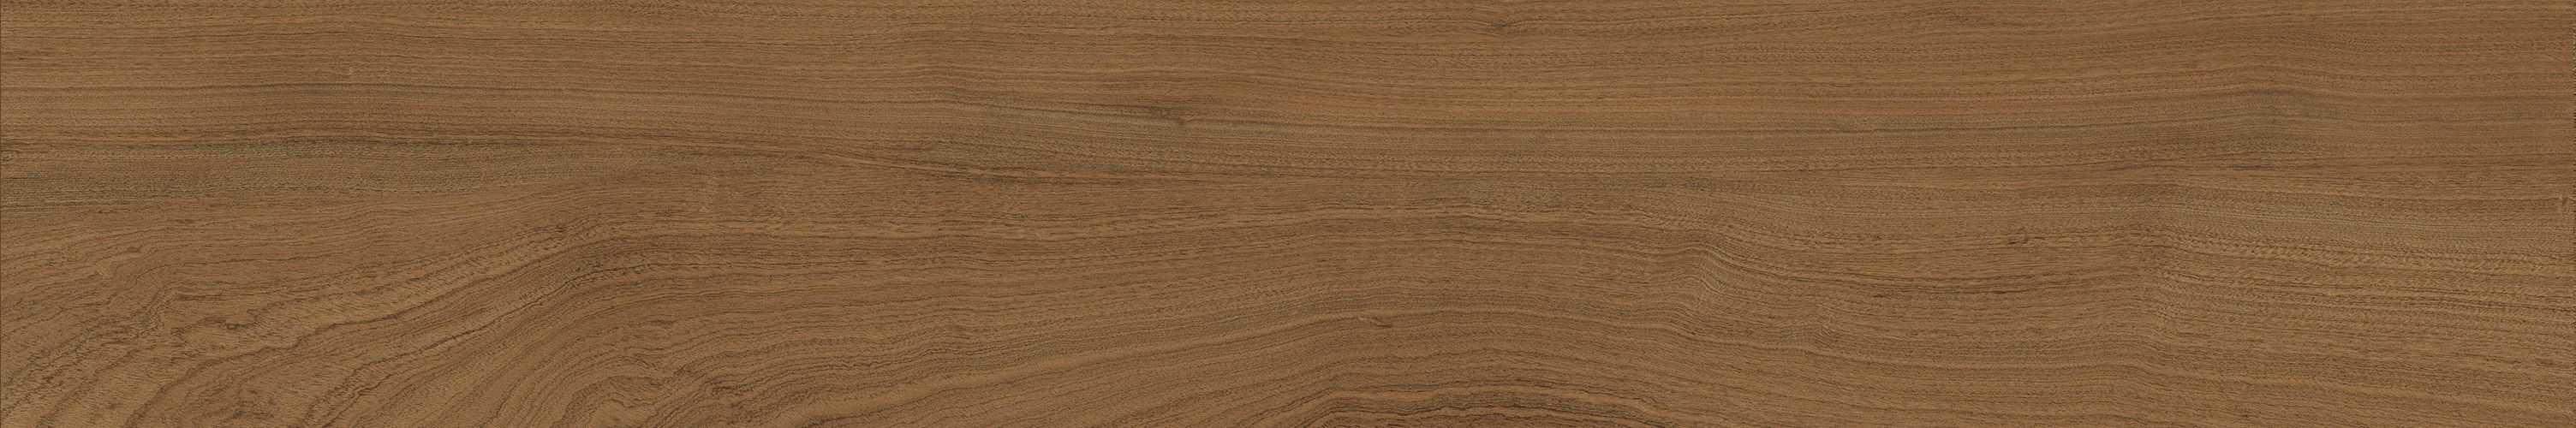 Плитка из керамогранита матовая Italon Элемент Вуд 7.2x60 коричневый (610130000478) плитка из керамогранита матовая italon элемент вуд 7 2x60 коричневый 610130000478